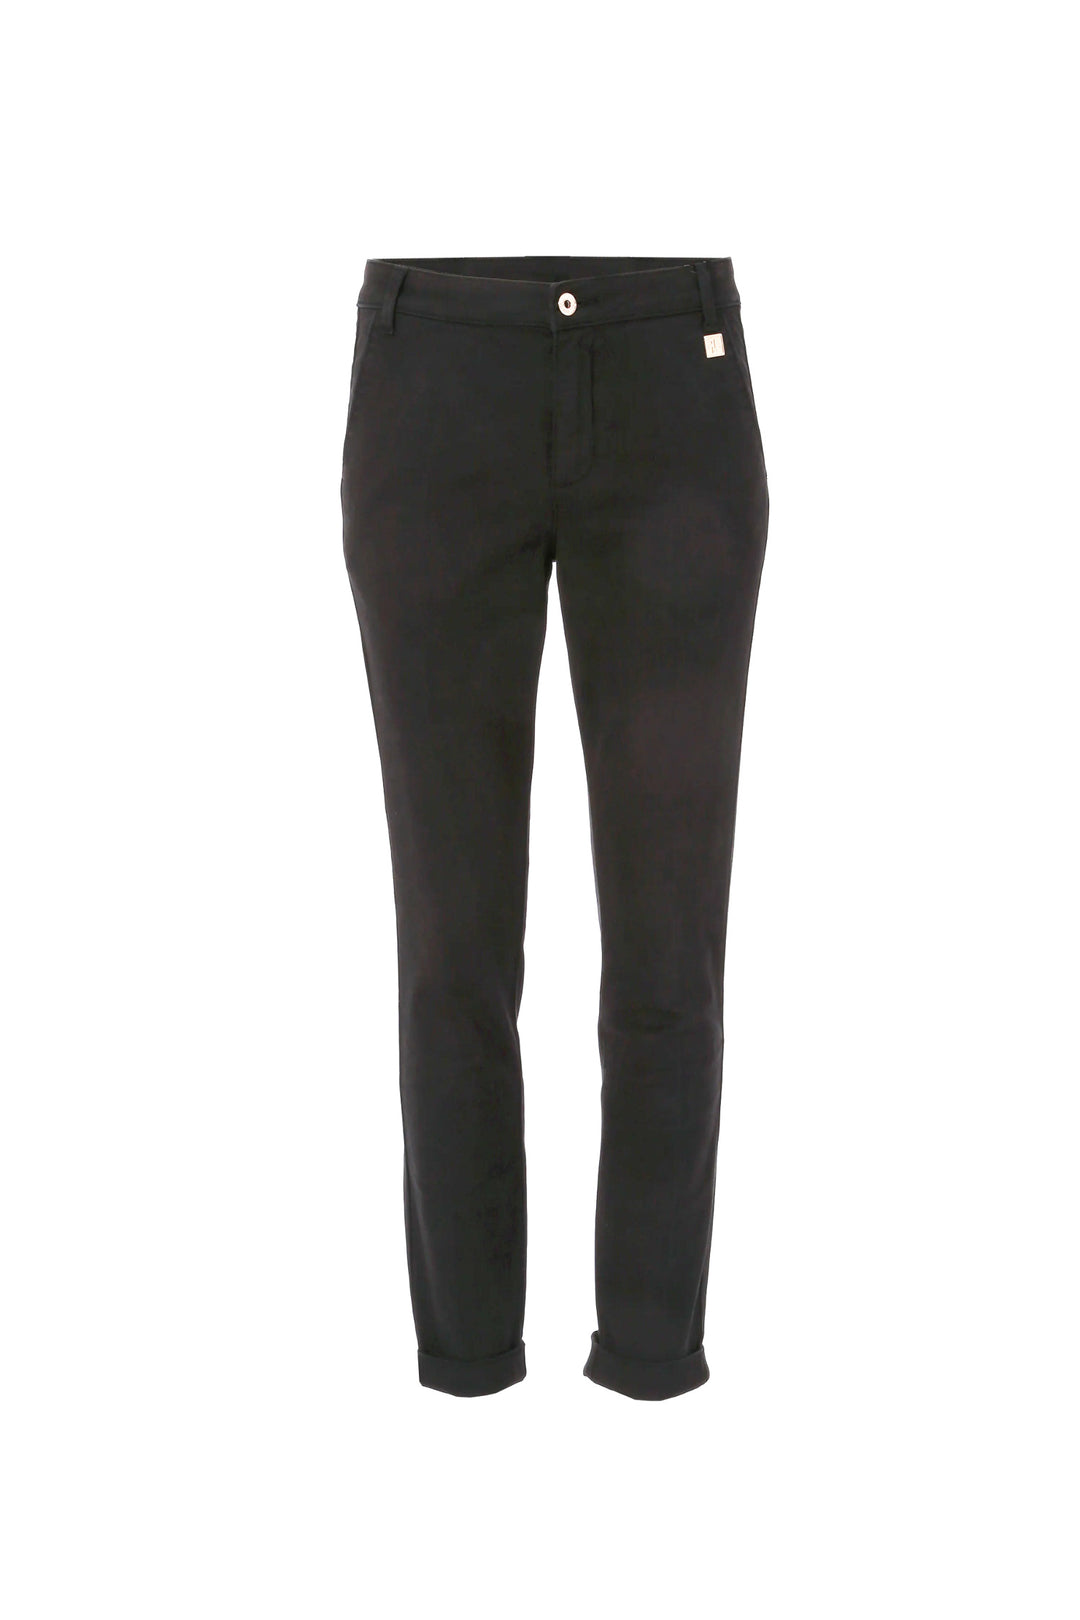 FRACOMINA Pantalone chino regular nero in gabardina di cotone - Mancinelli 1954